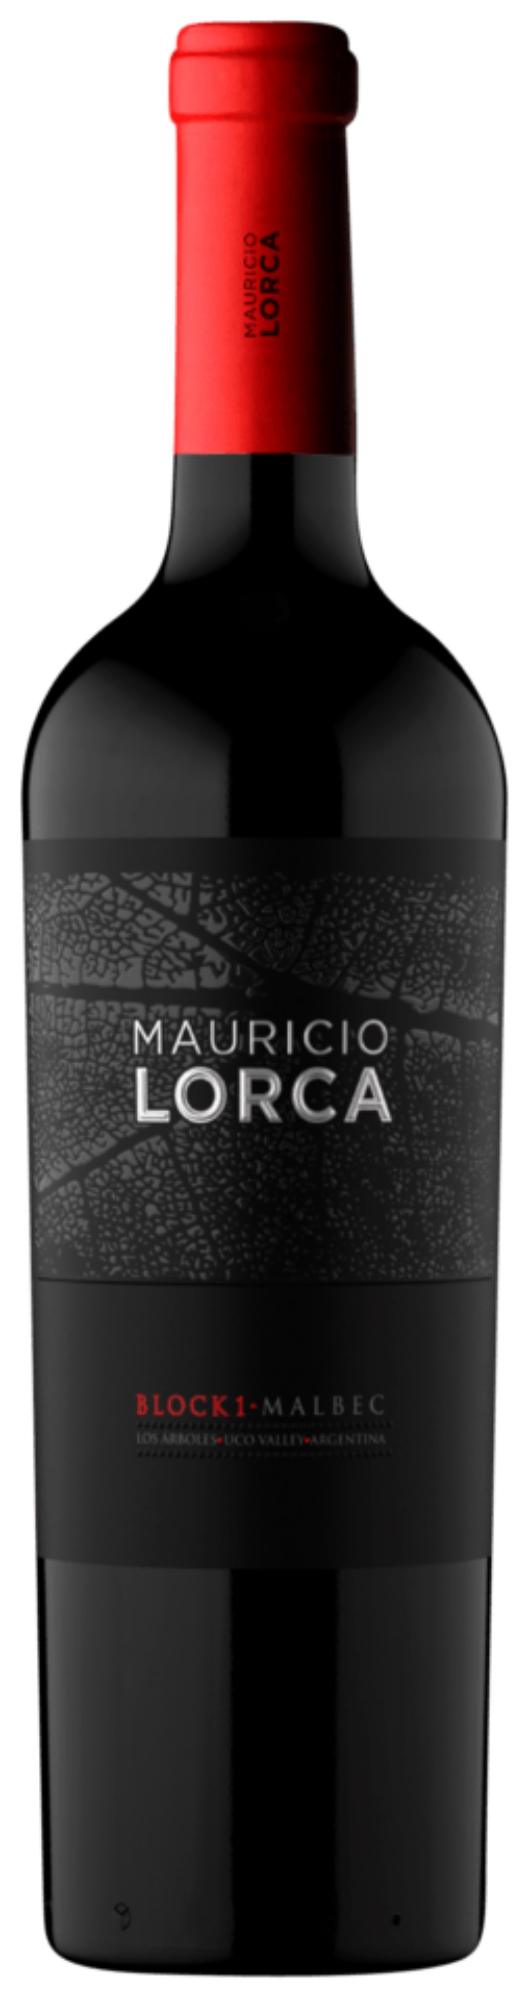 Mauricio Lorca Block 1 Malbec 2015